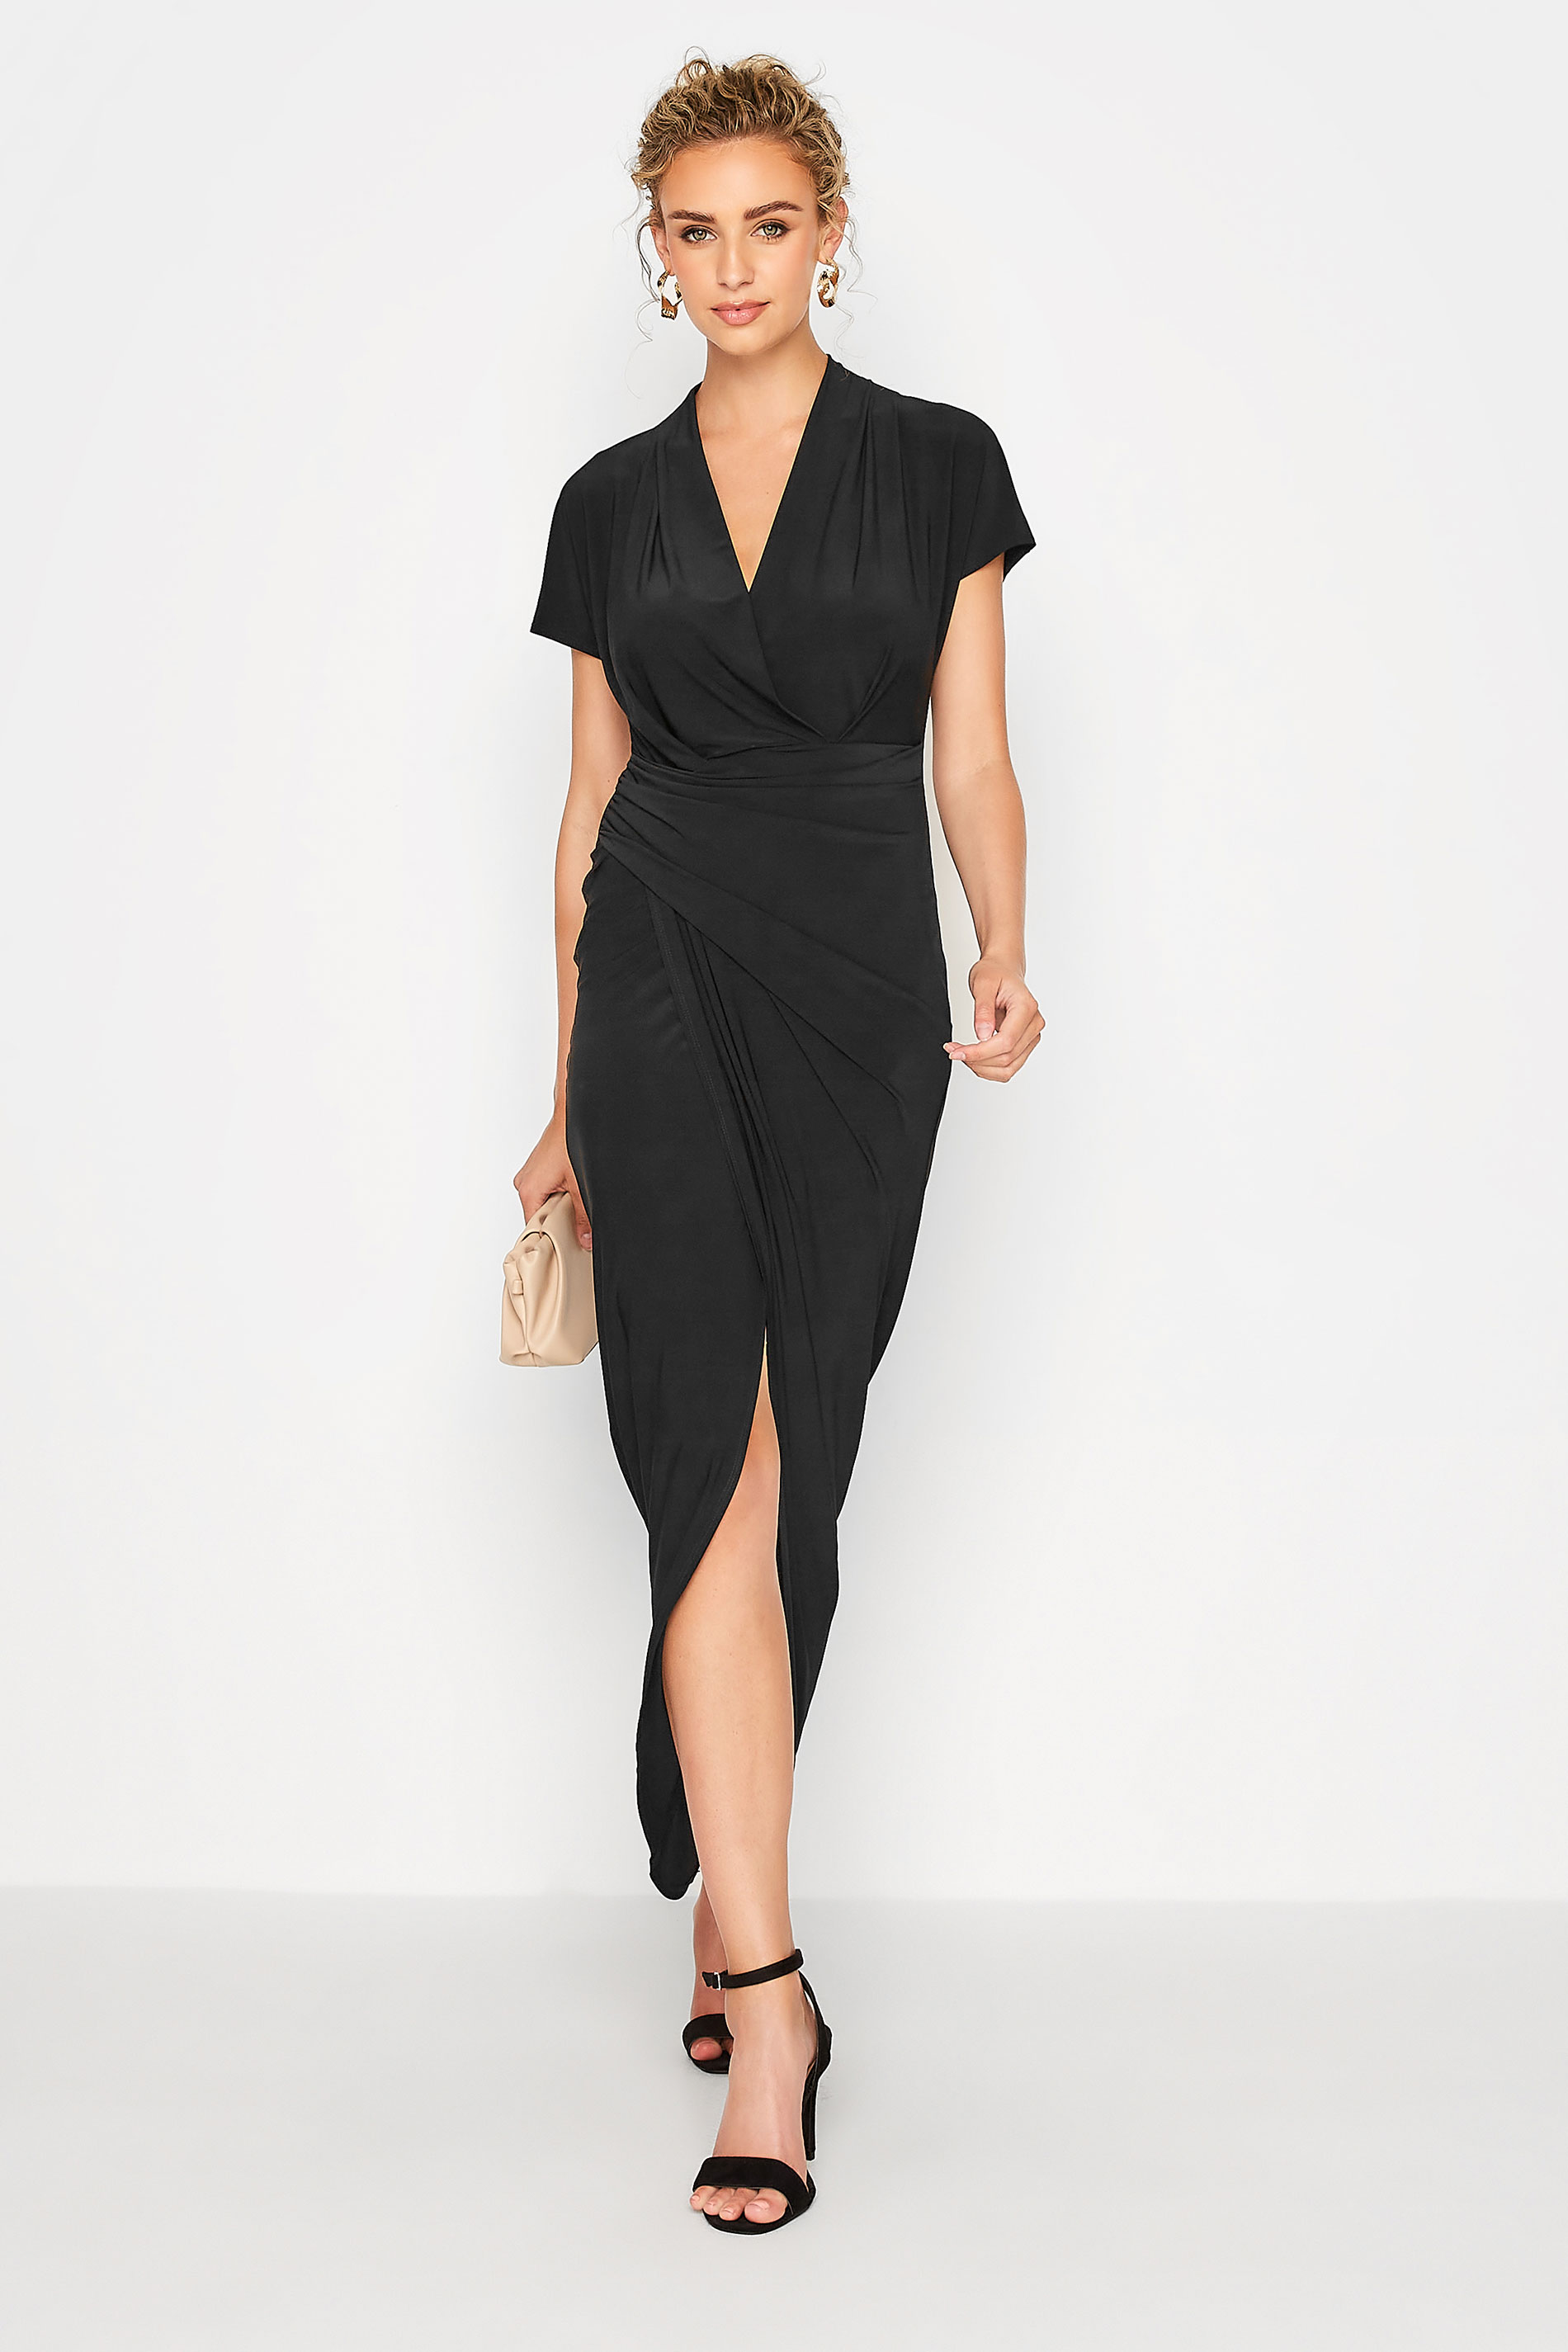 LTS Tall Women's Black Wrap Dress | Long Tall Sally 2